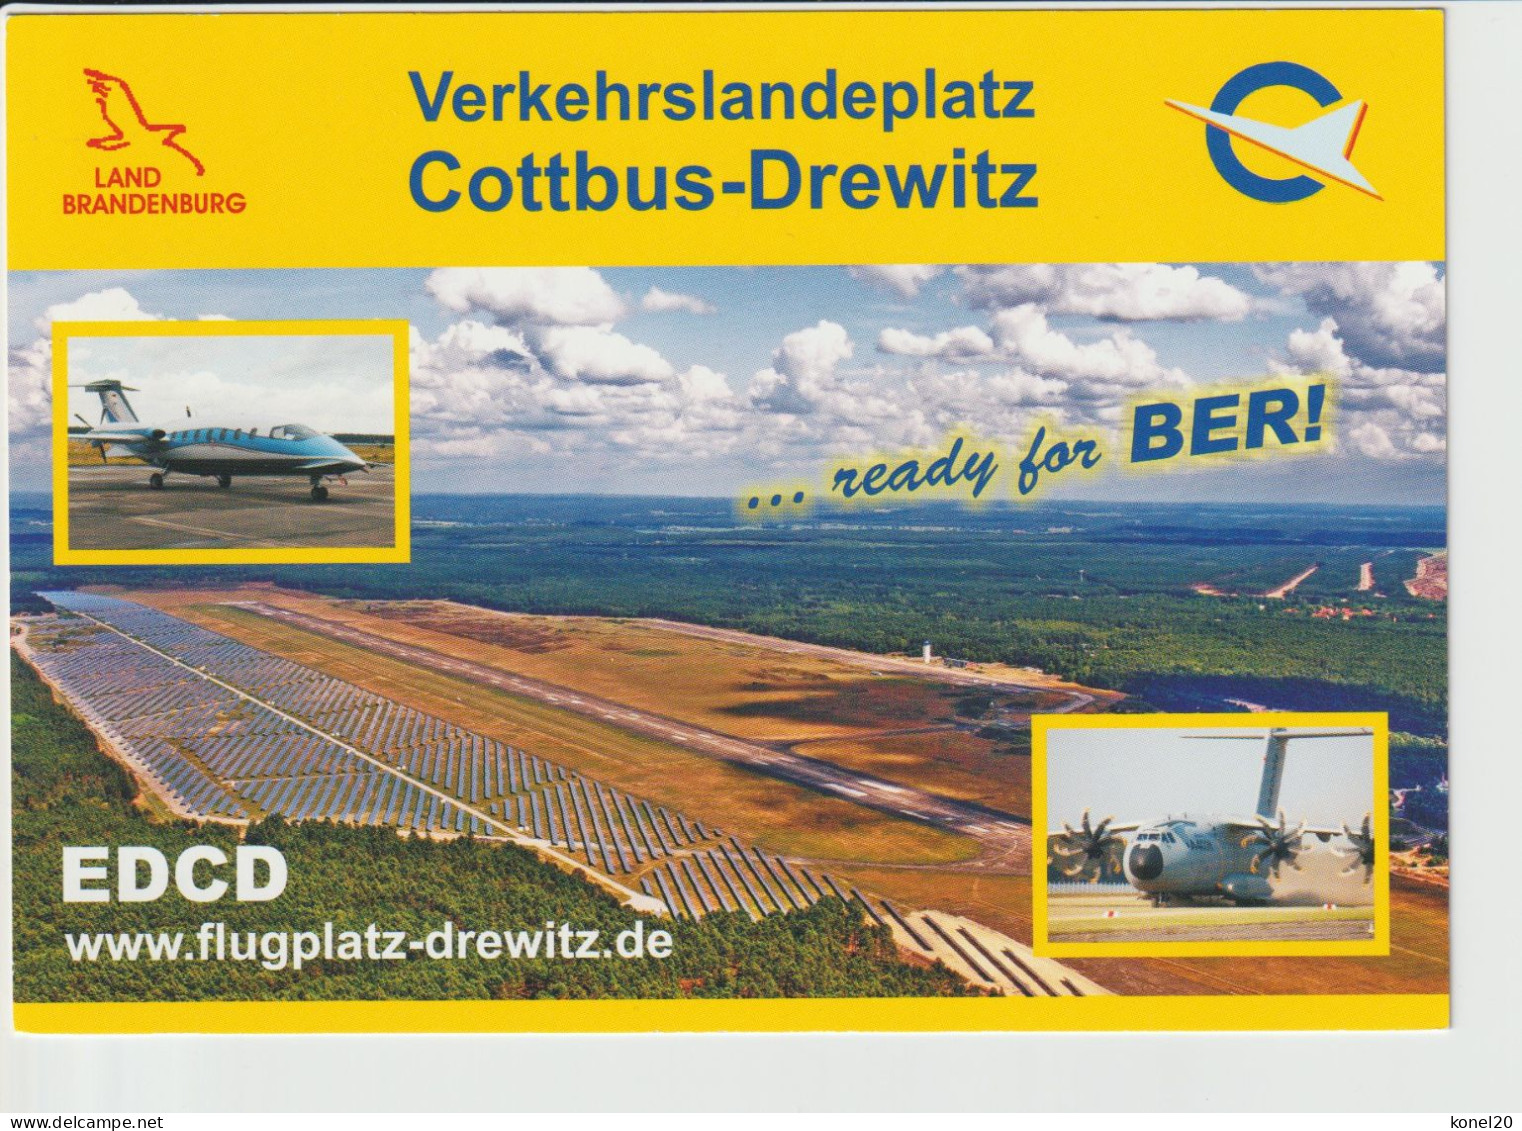 Promotioncard Verkehrlandeplatz Cottbus-Drewitz - 1919-1938: Entre Guerras